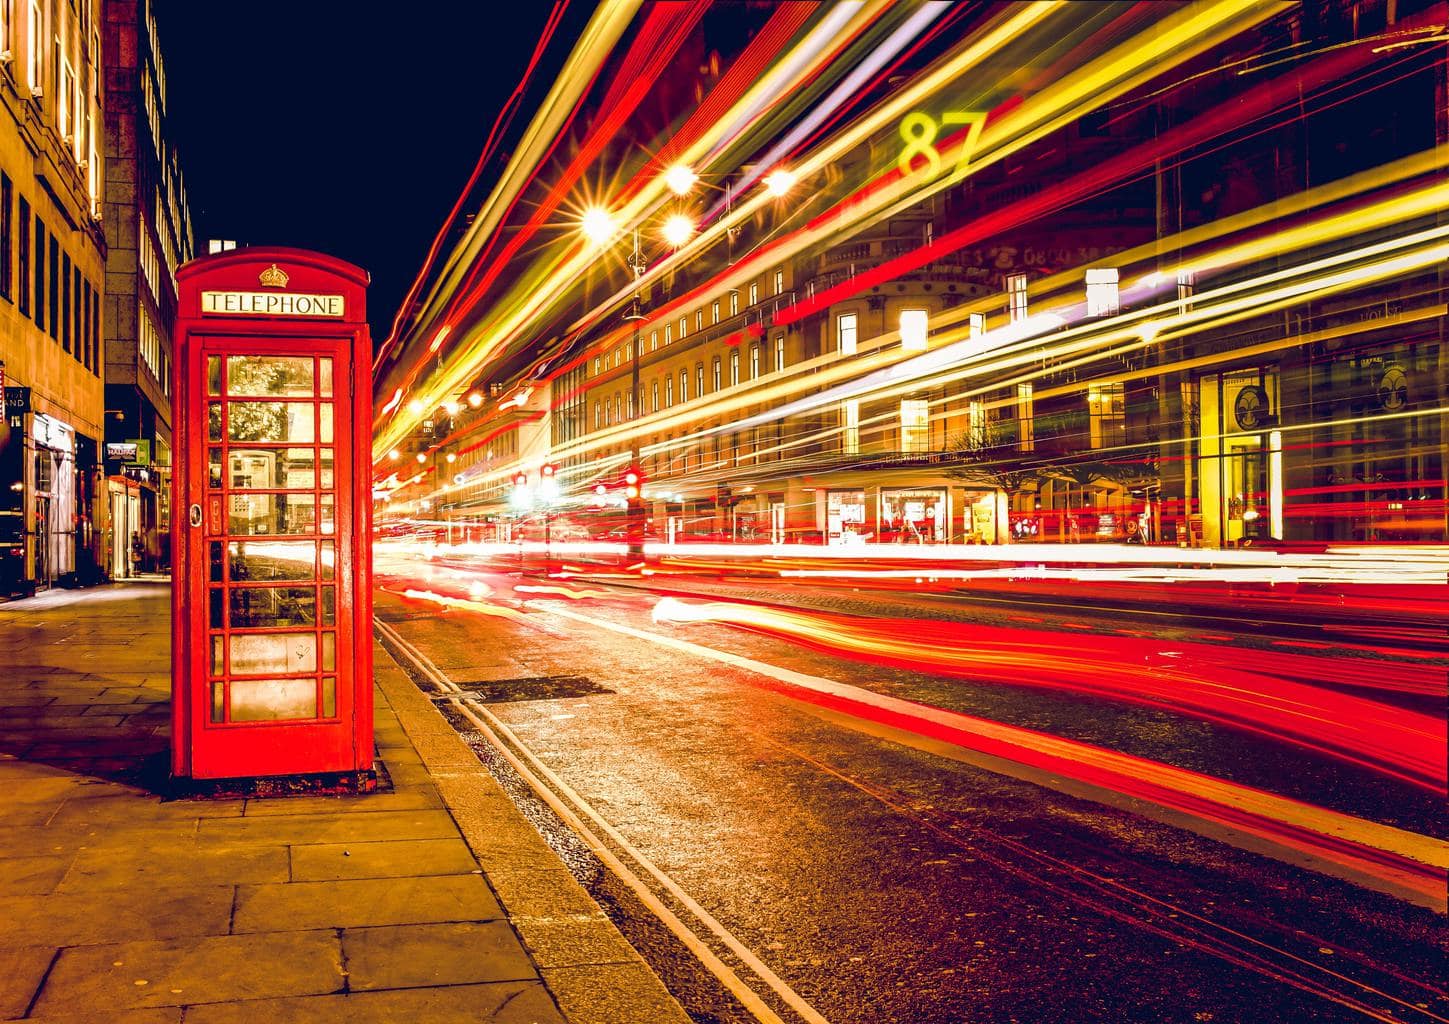 London phone booth